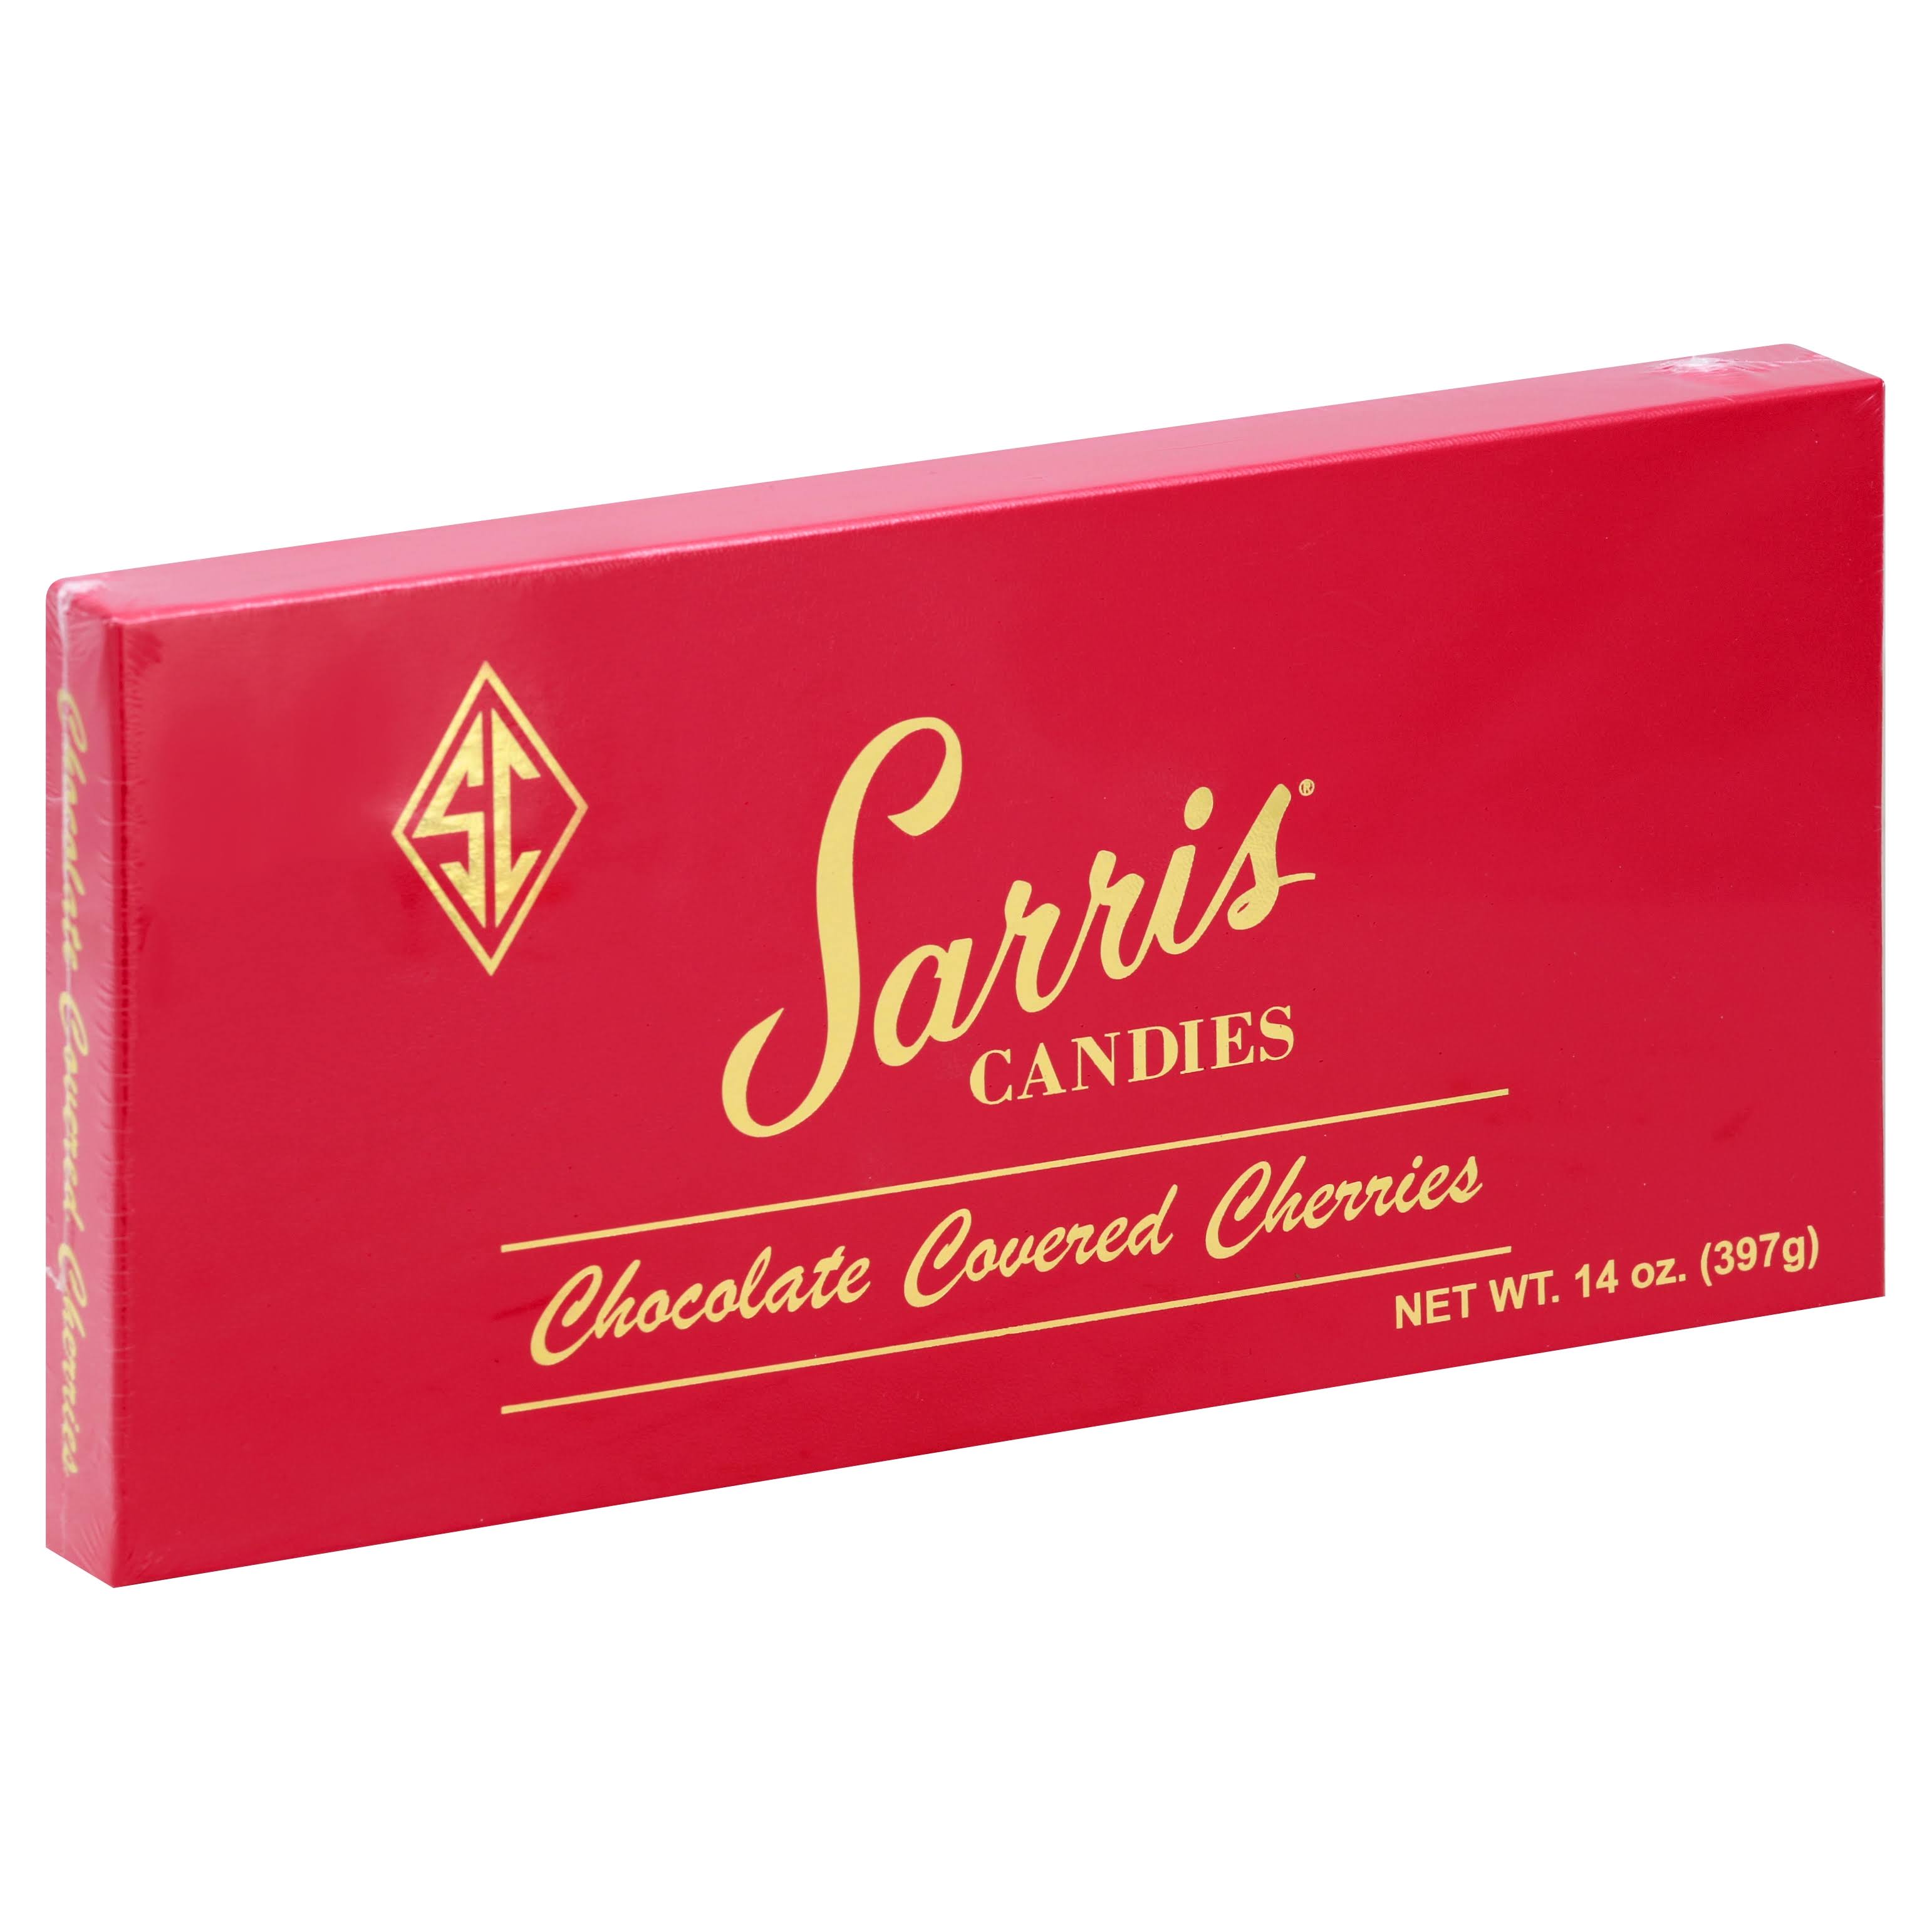 Sarris Candies Candies, Chocolates Covered Cherries - 14 oz